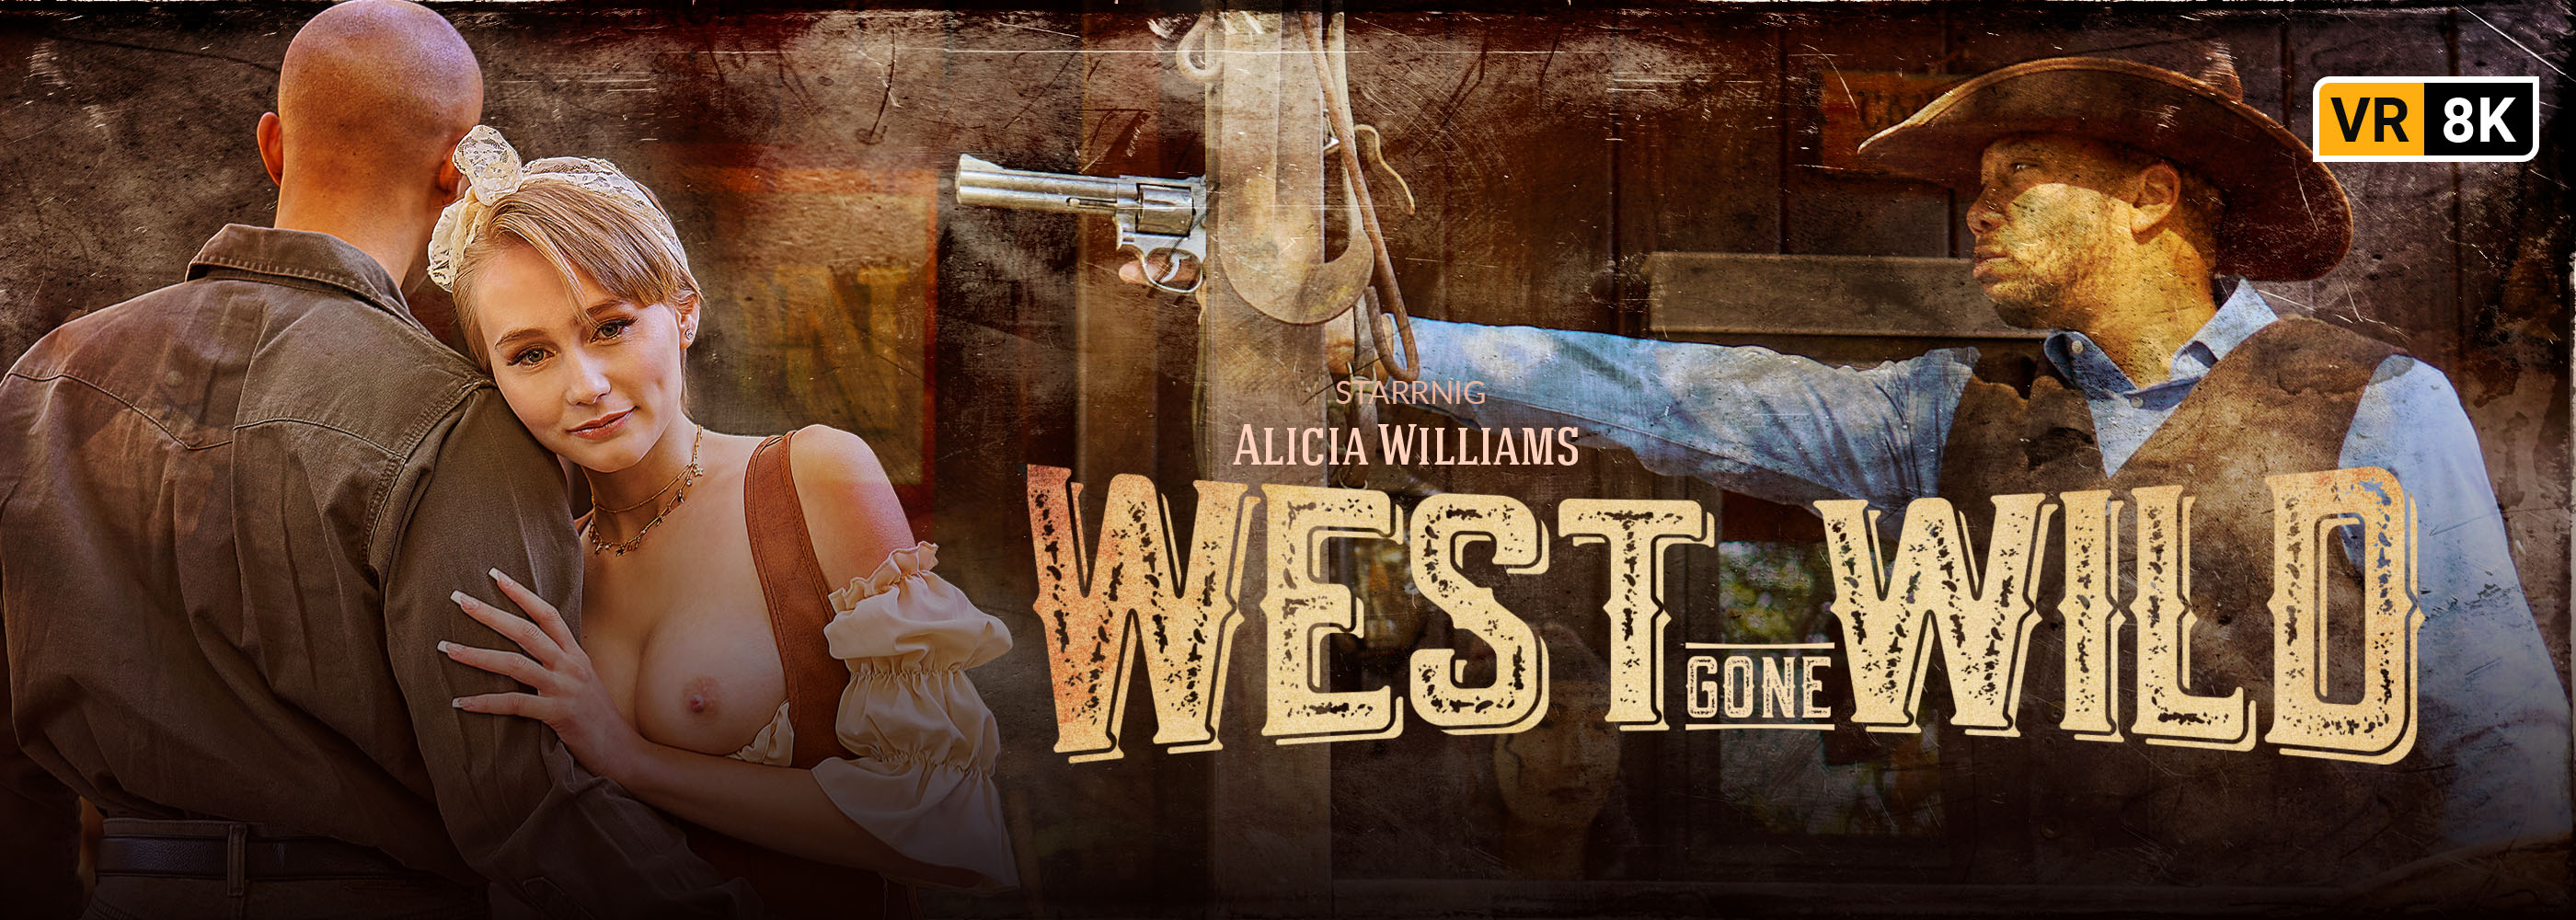 West Gone Wild - VR Porn Video, Starring Alicia Williams VR